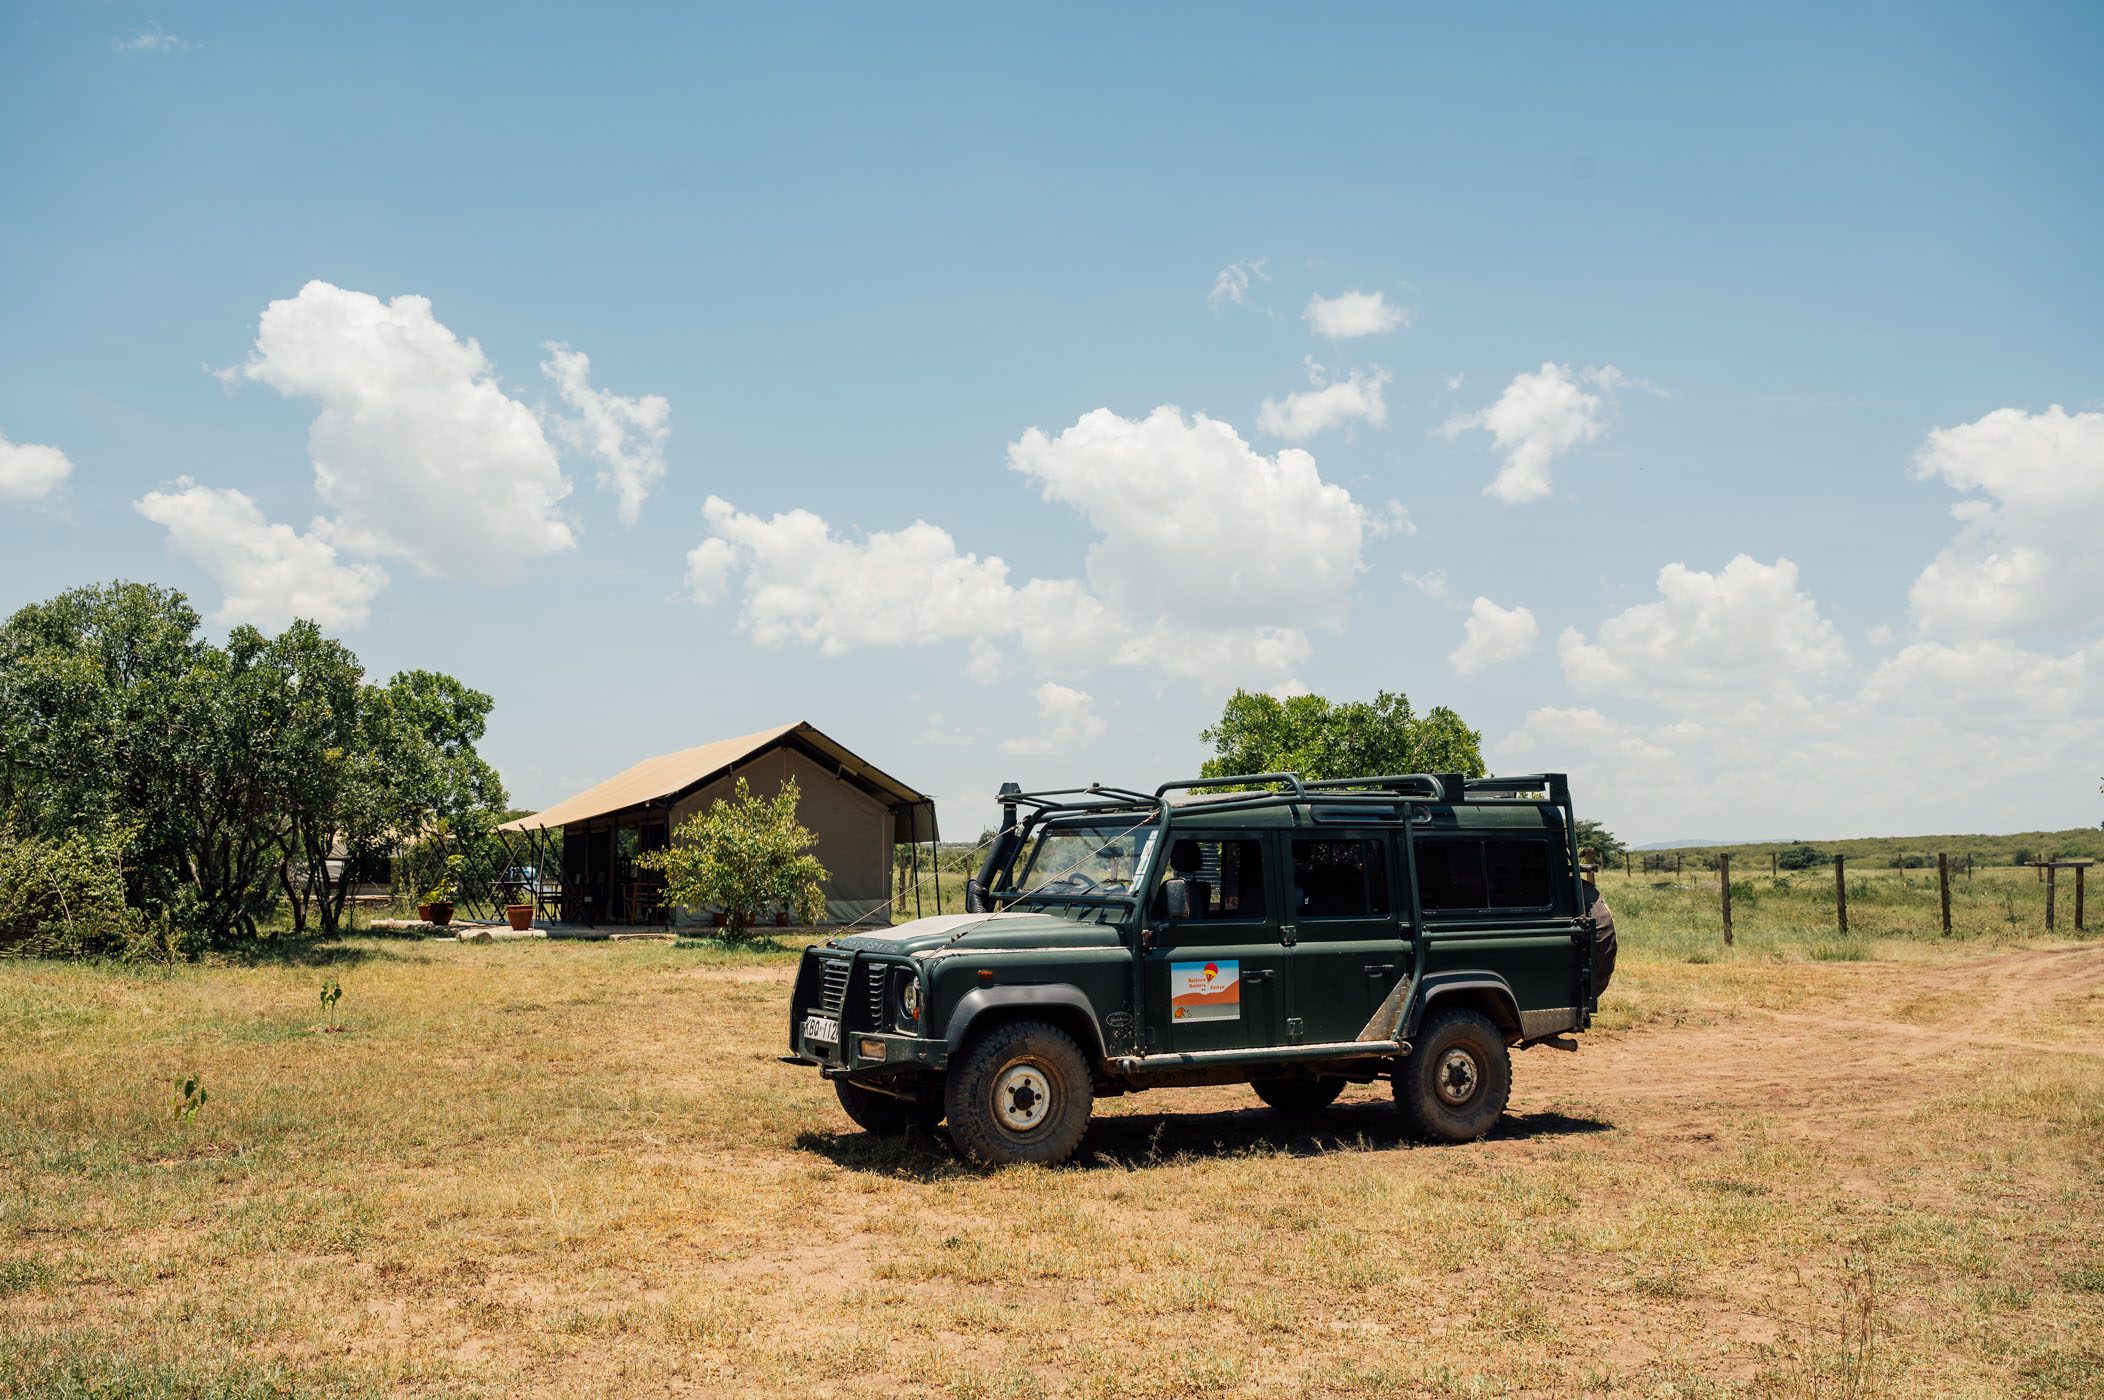 Olimba Mara - socially conscious safaris in Kenya